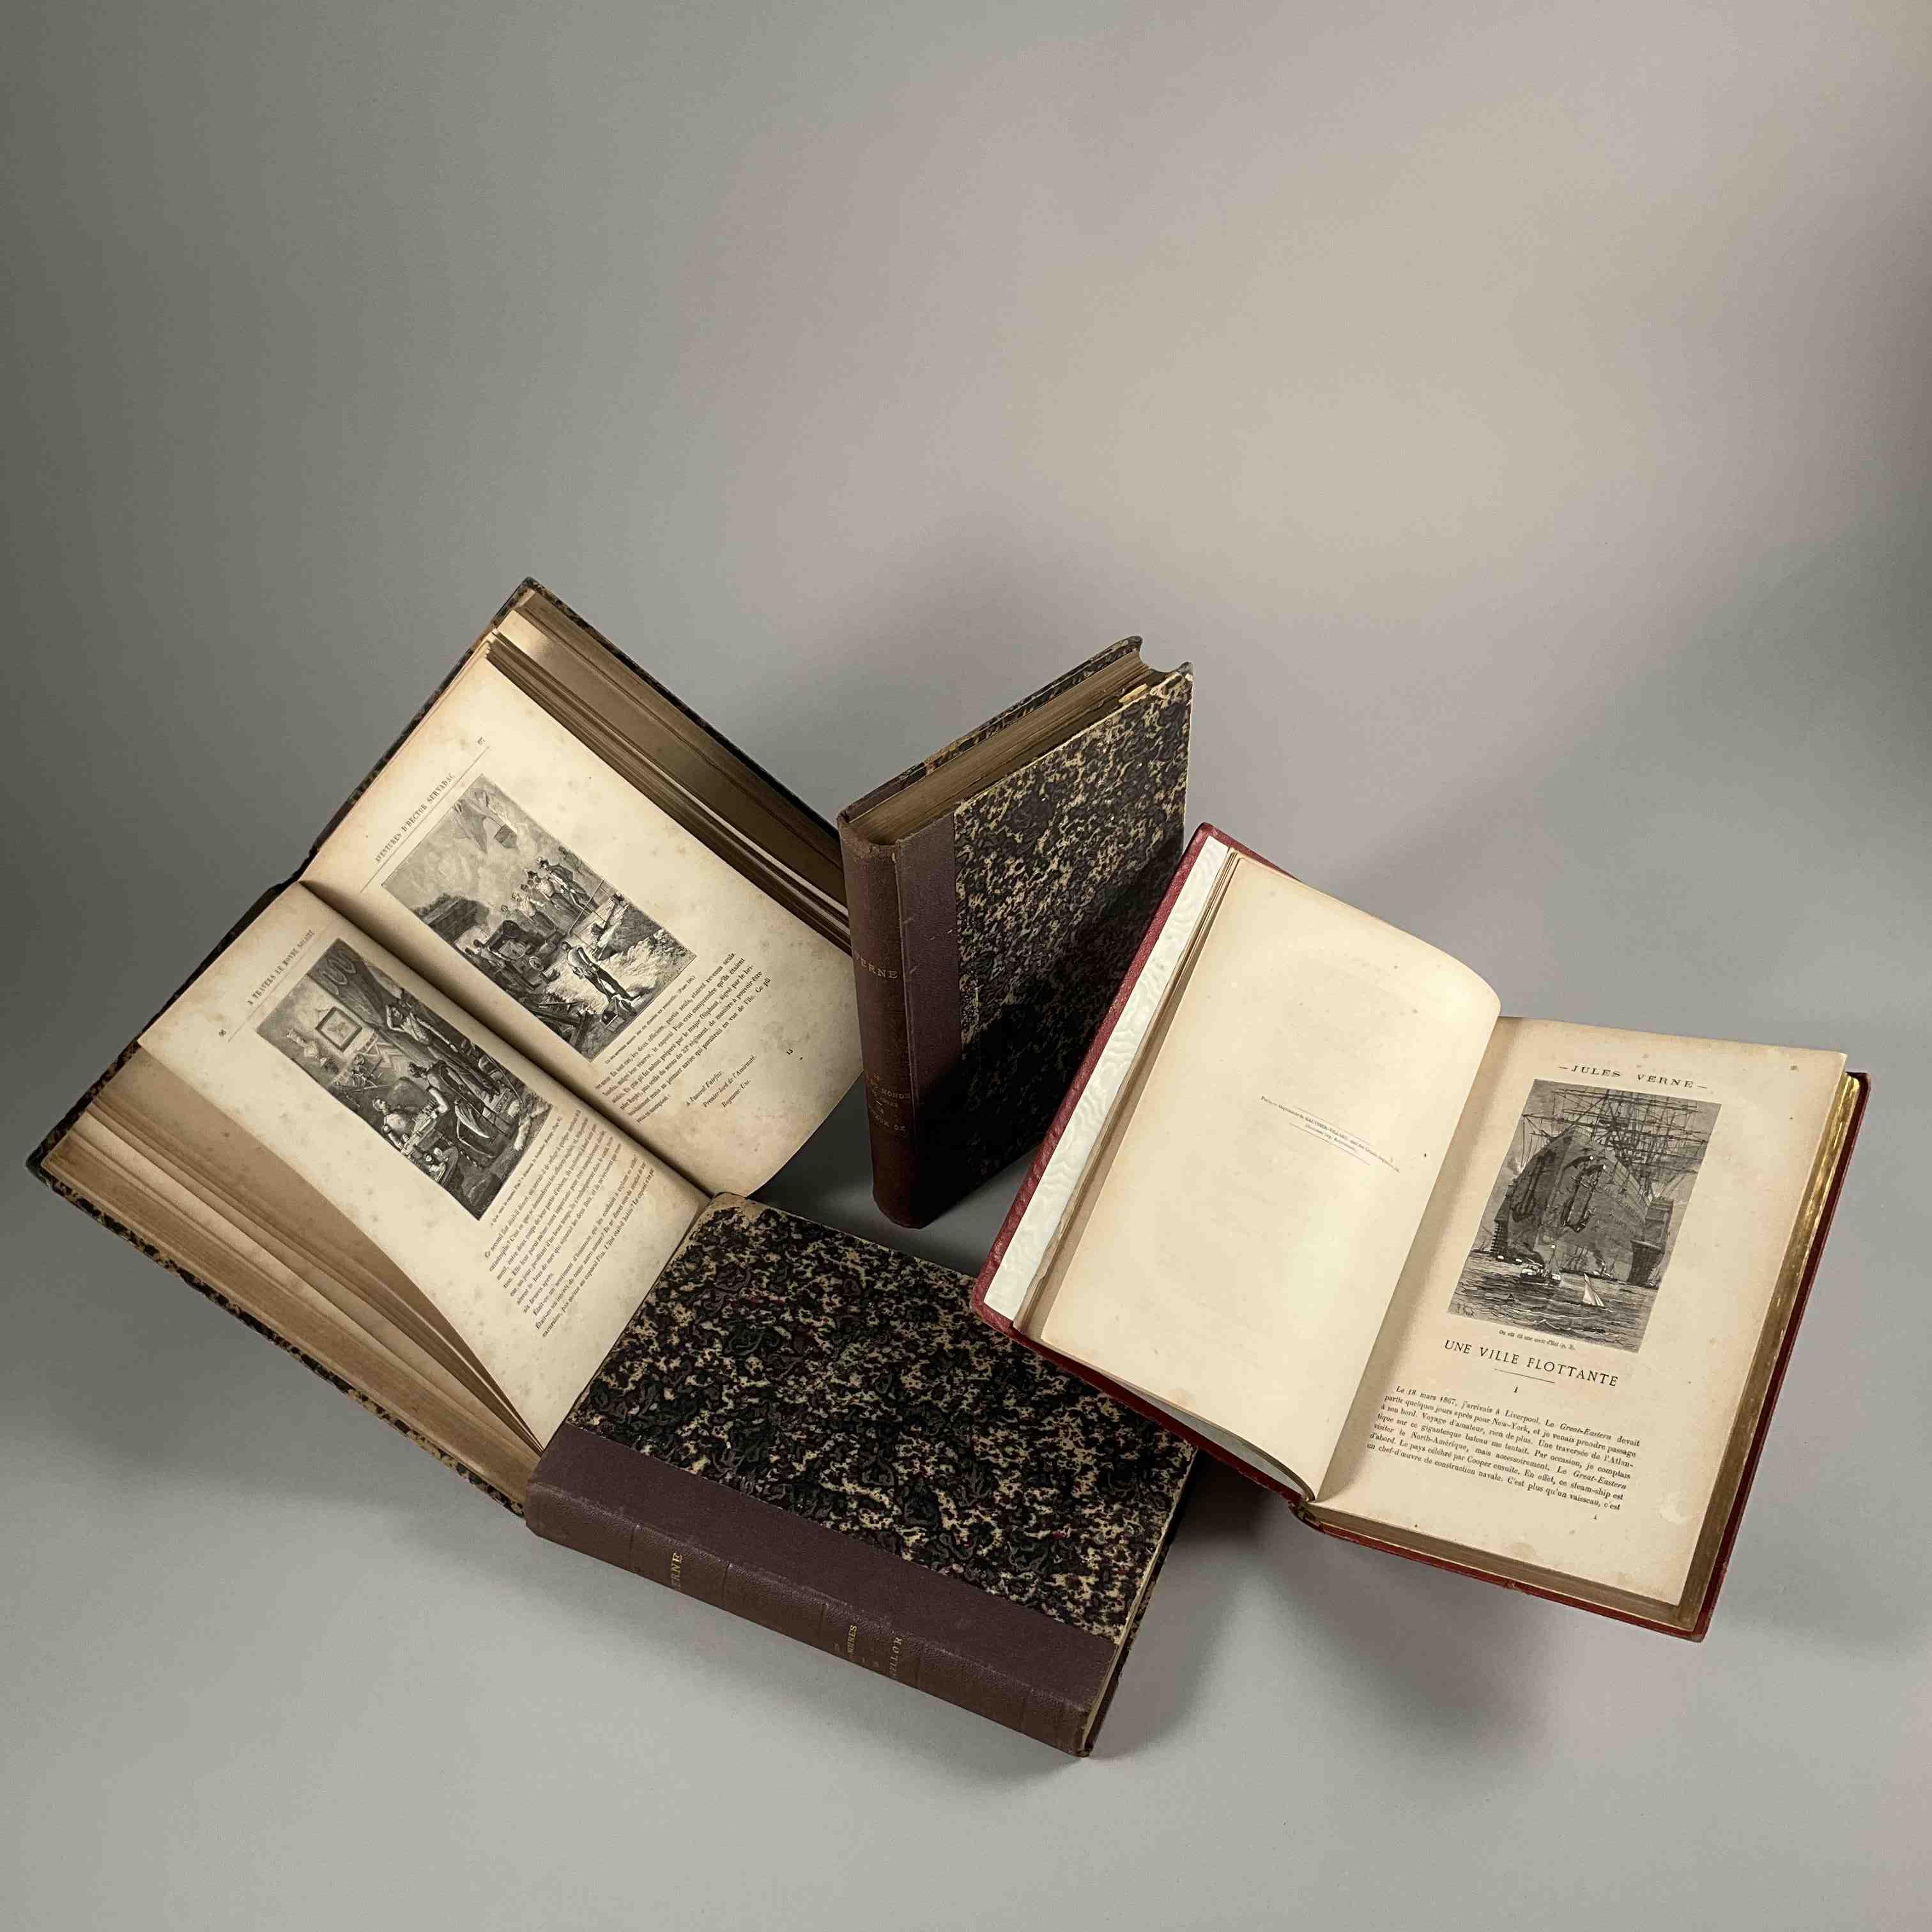 Jules Verne, 4 volumes en demi-percaline ou demi-chagrin plats percaline.
1....